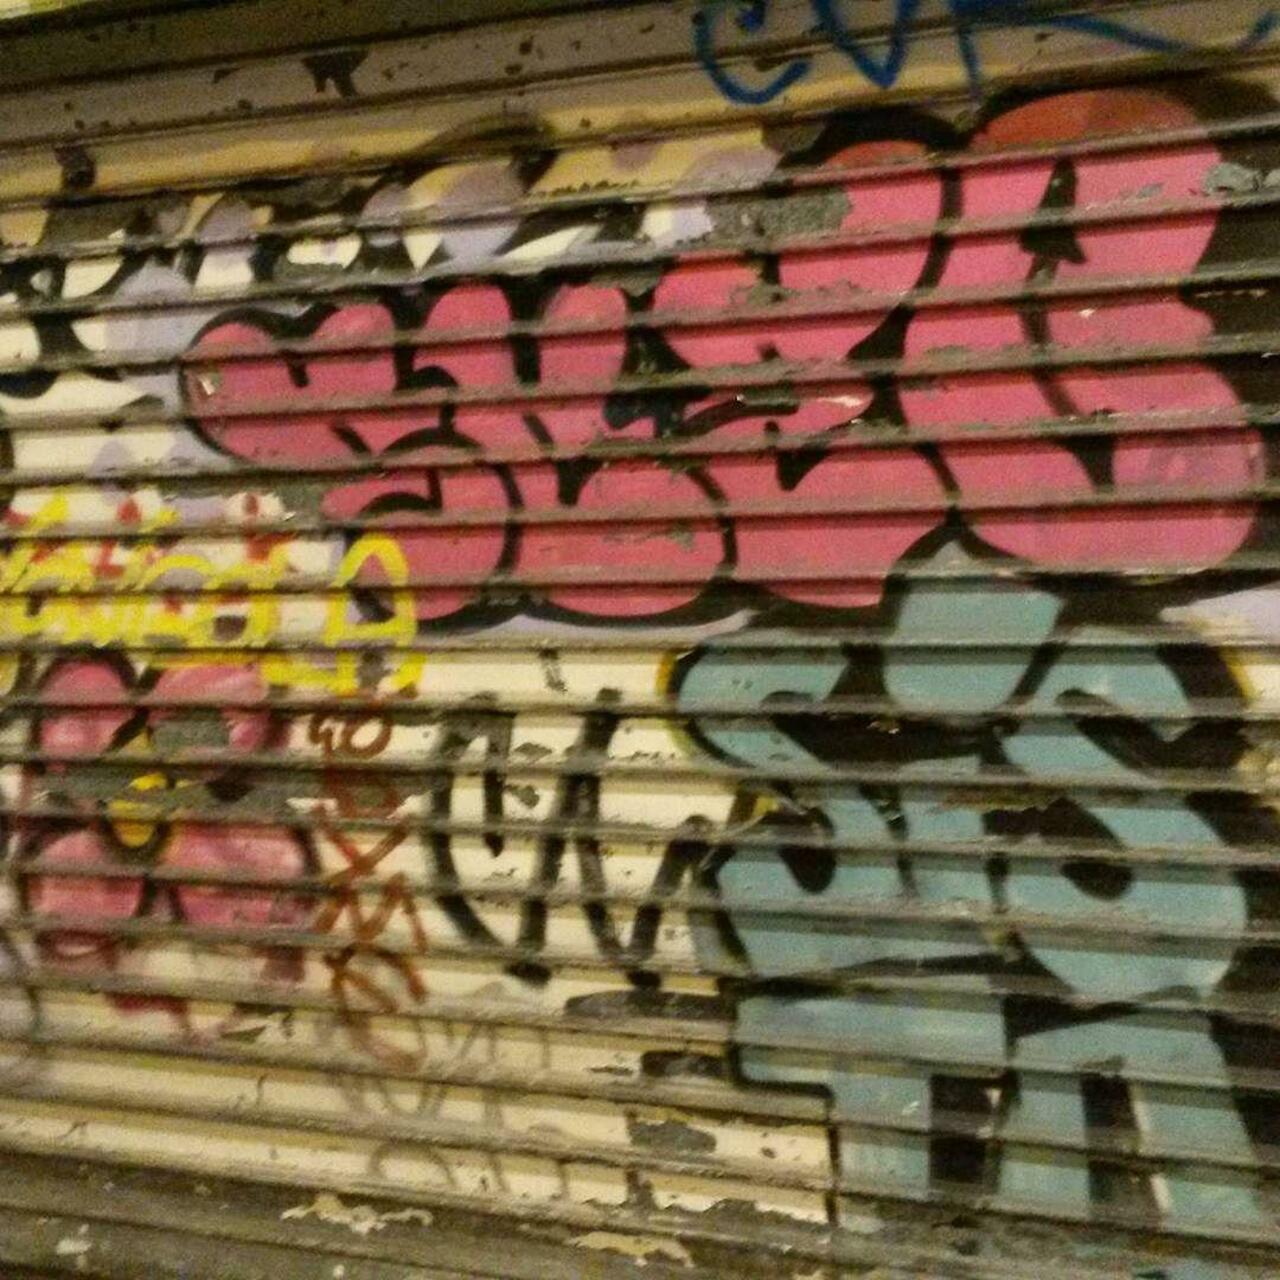 #Paris #graffiti photo by @le_cyclopede http://ift.tt/1GikQ5W #StreetArt http://t.co/k1ZXNgGOFu